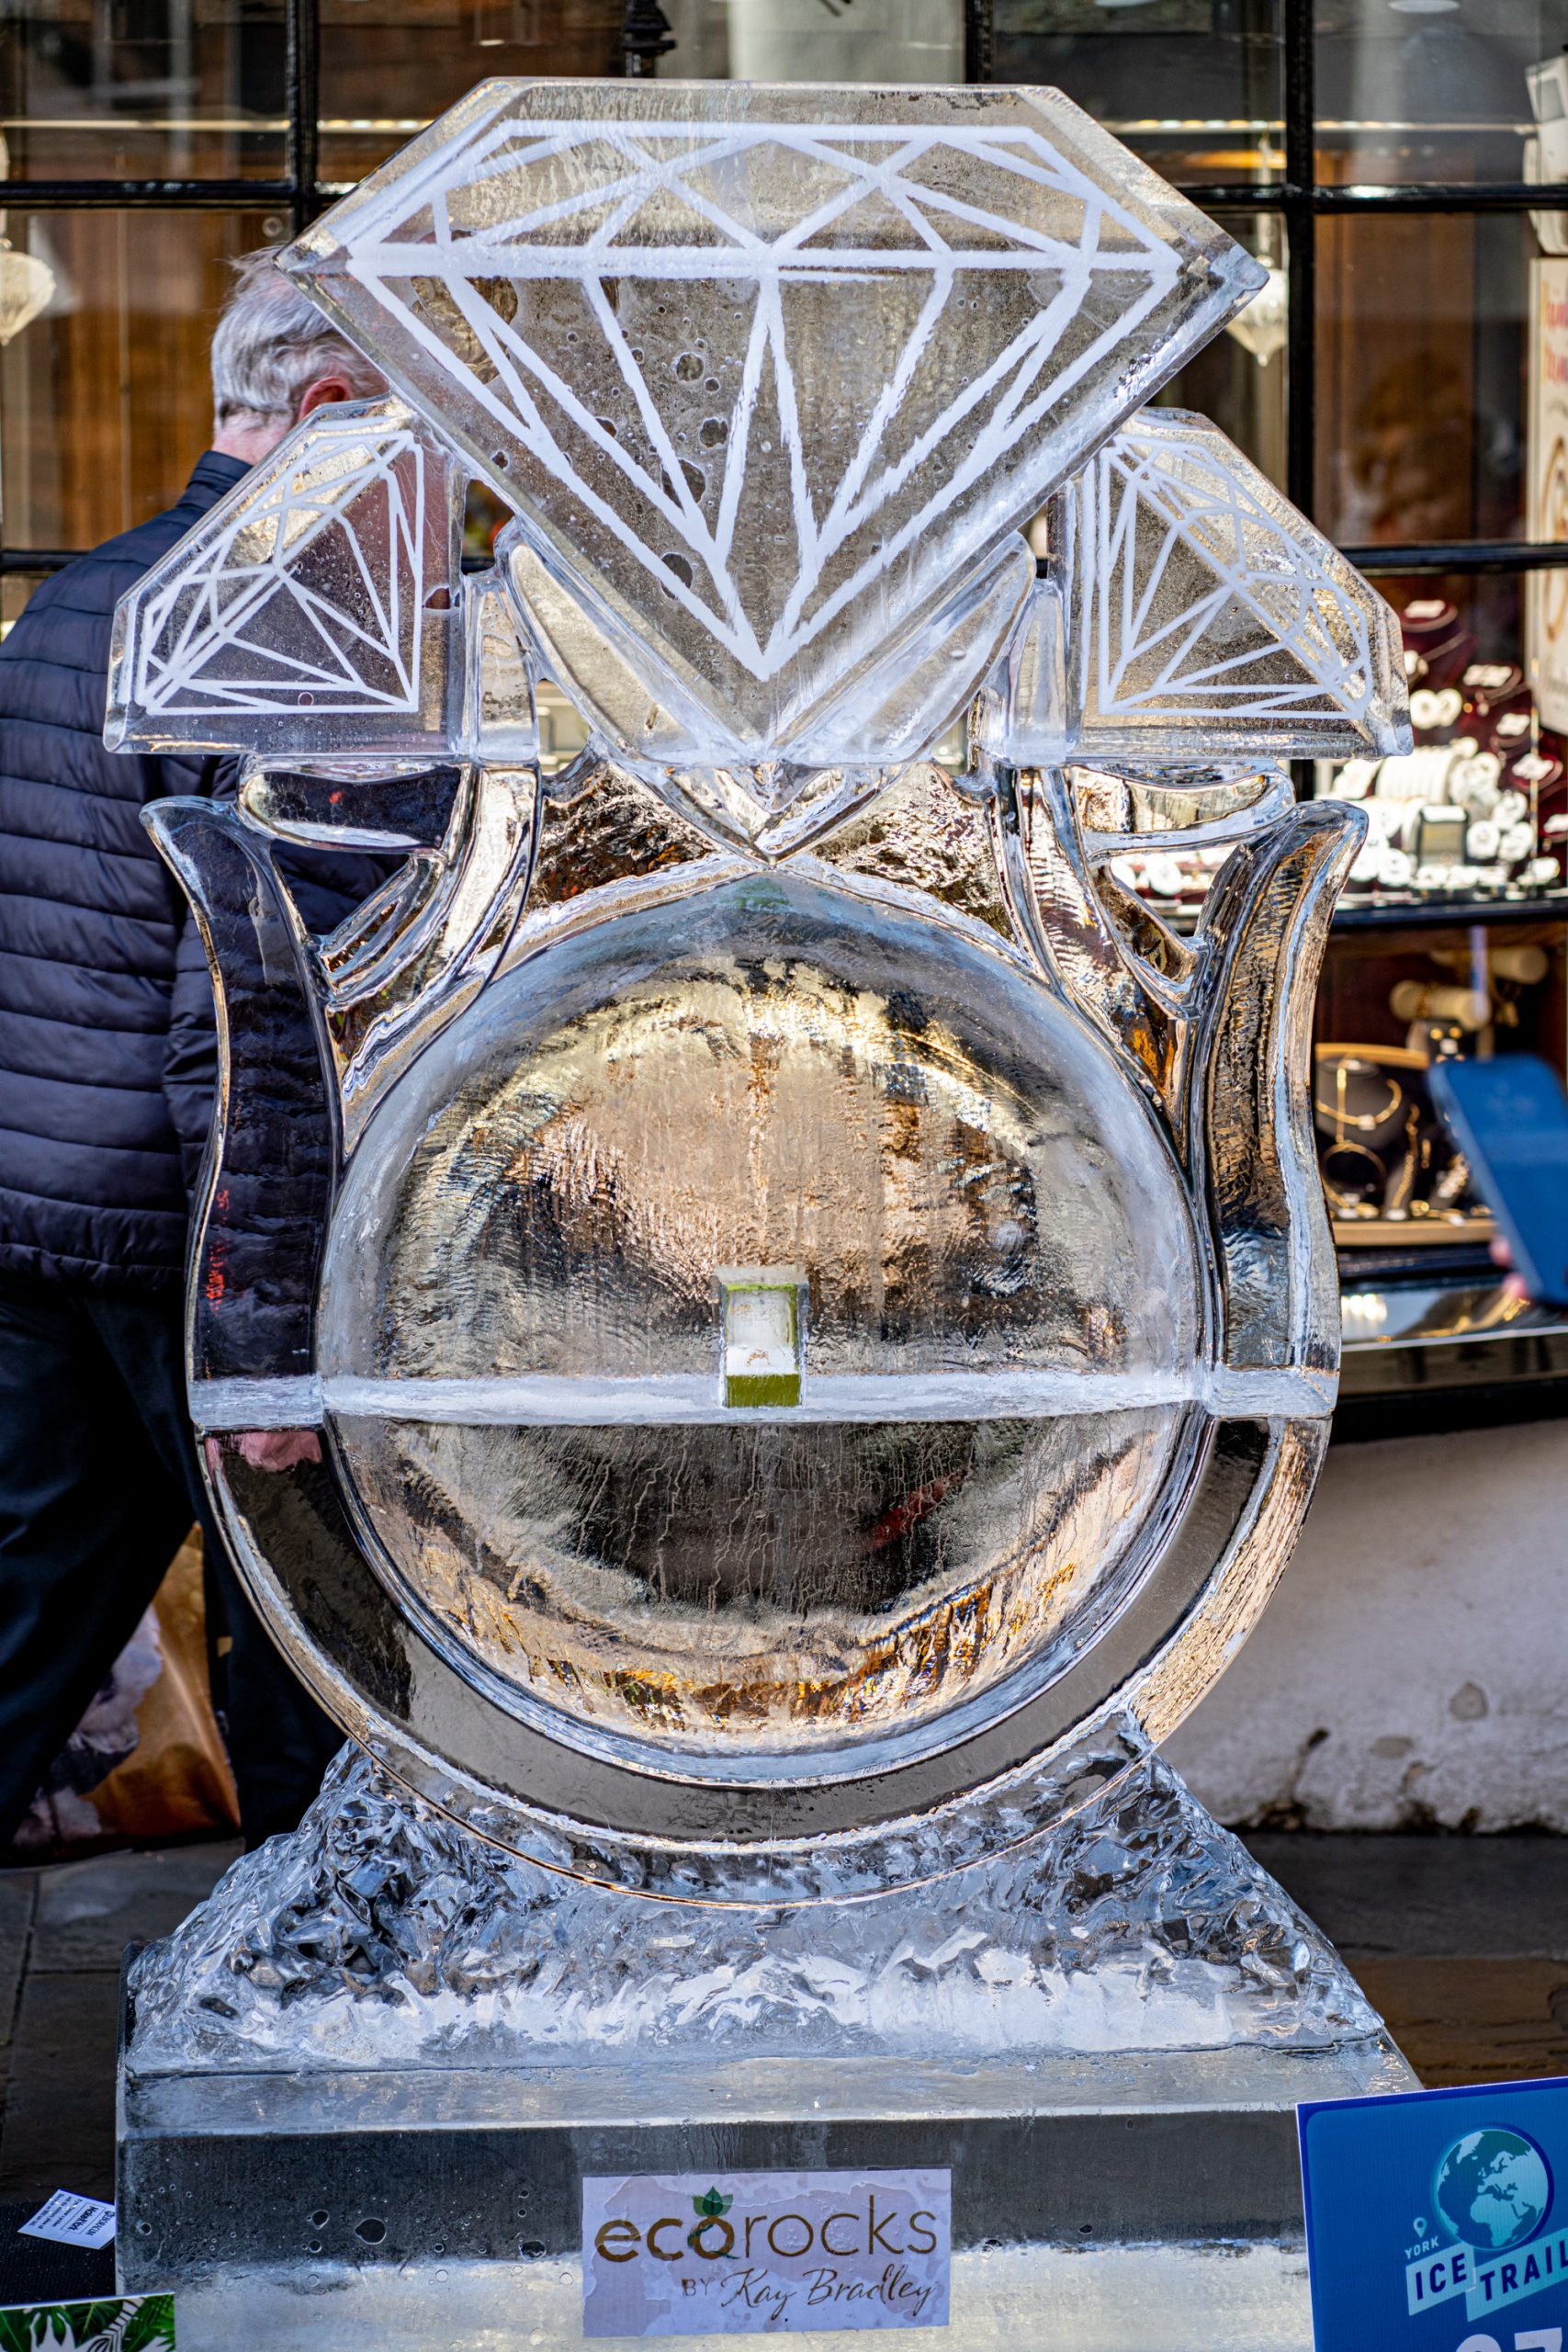 diamond ice sculpture with jewellery frozen inside